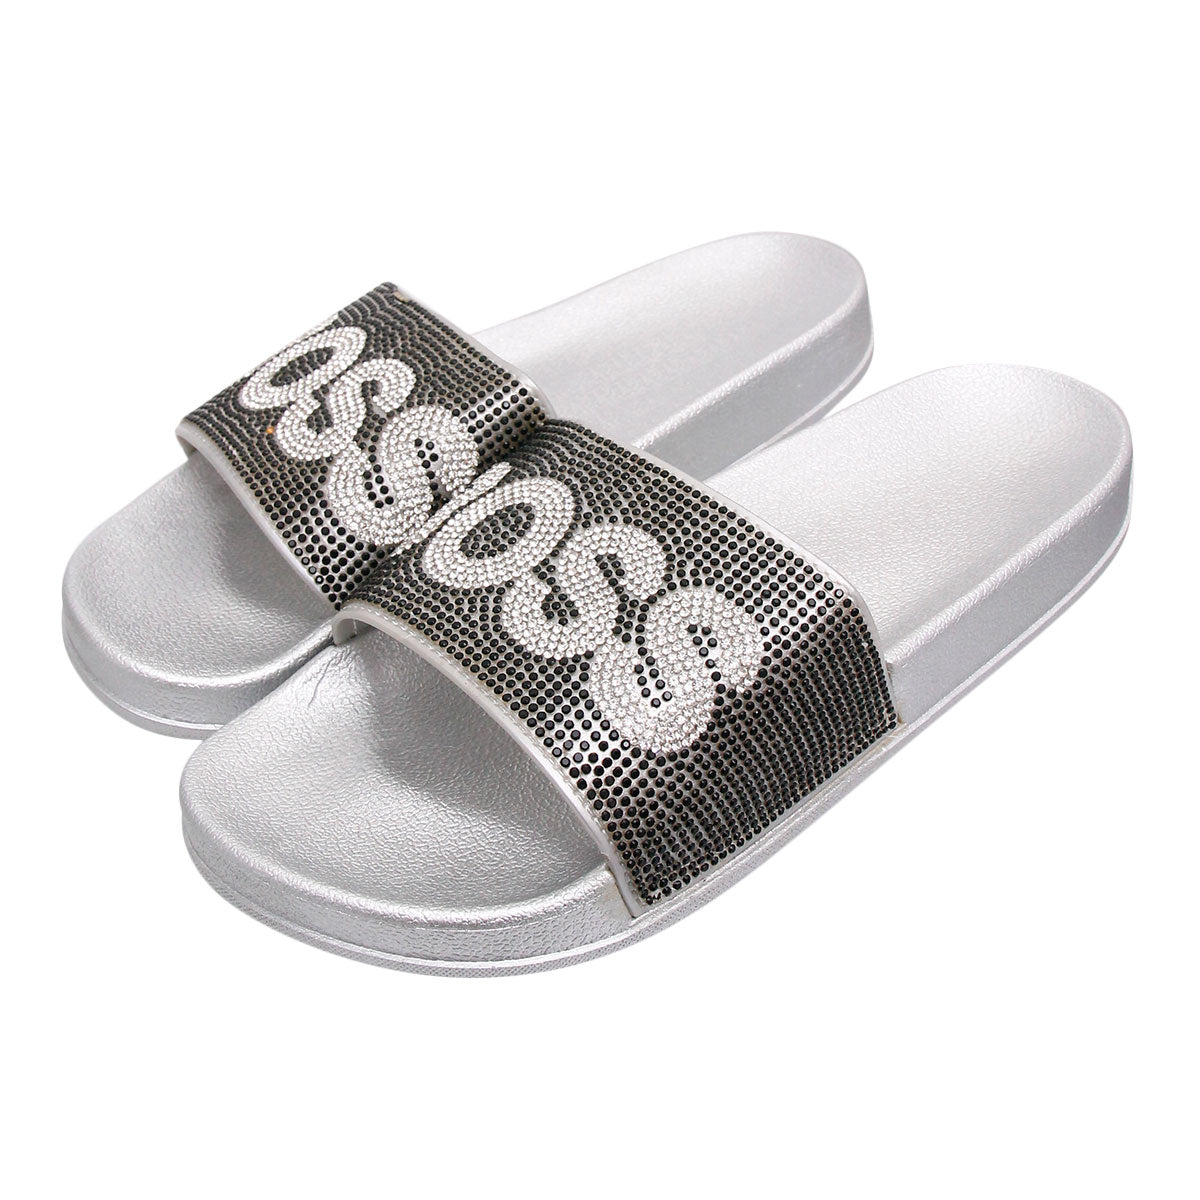 Size 8 Black BOSS Silver Slides